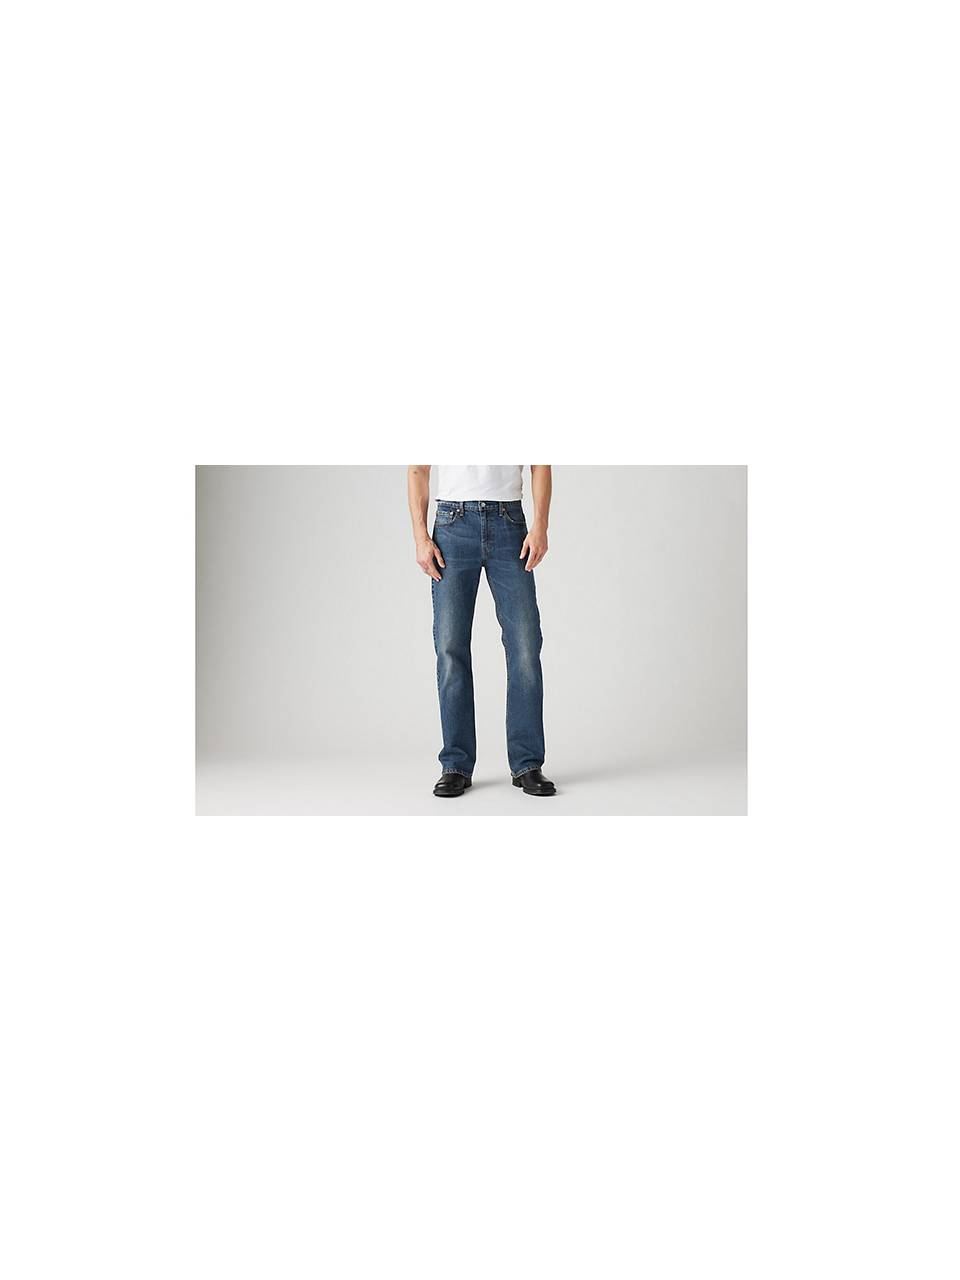 Men's Stretch Bootcut Jeans: Shop the Best Jeans for | Levi's®